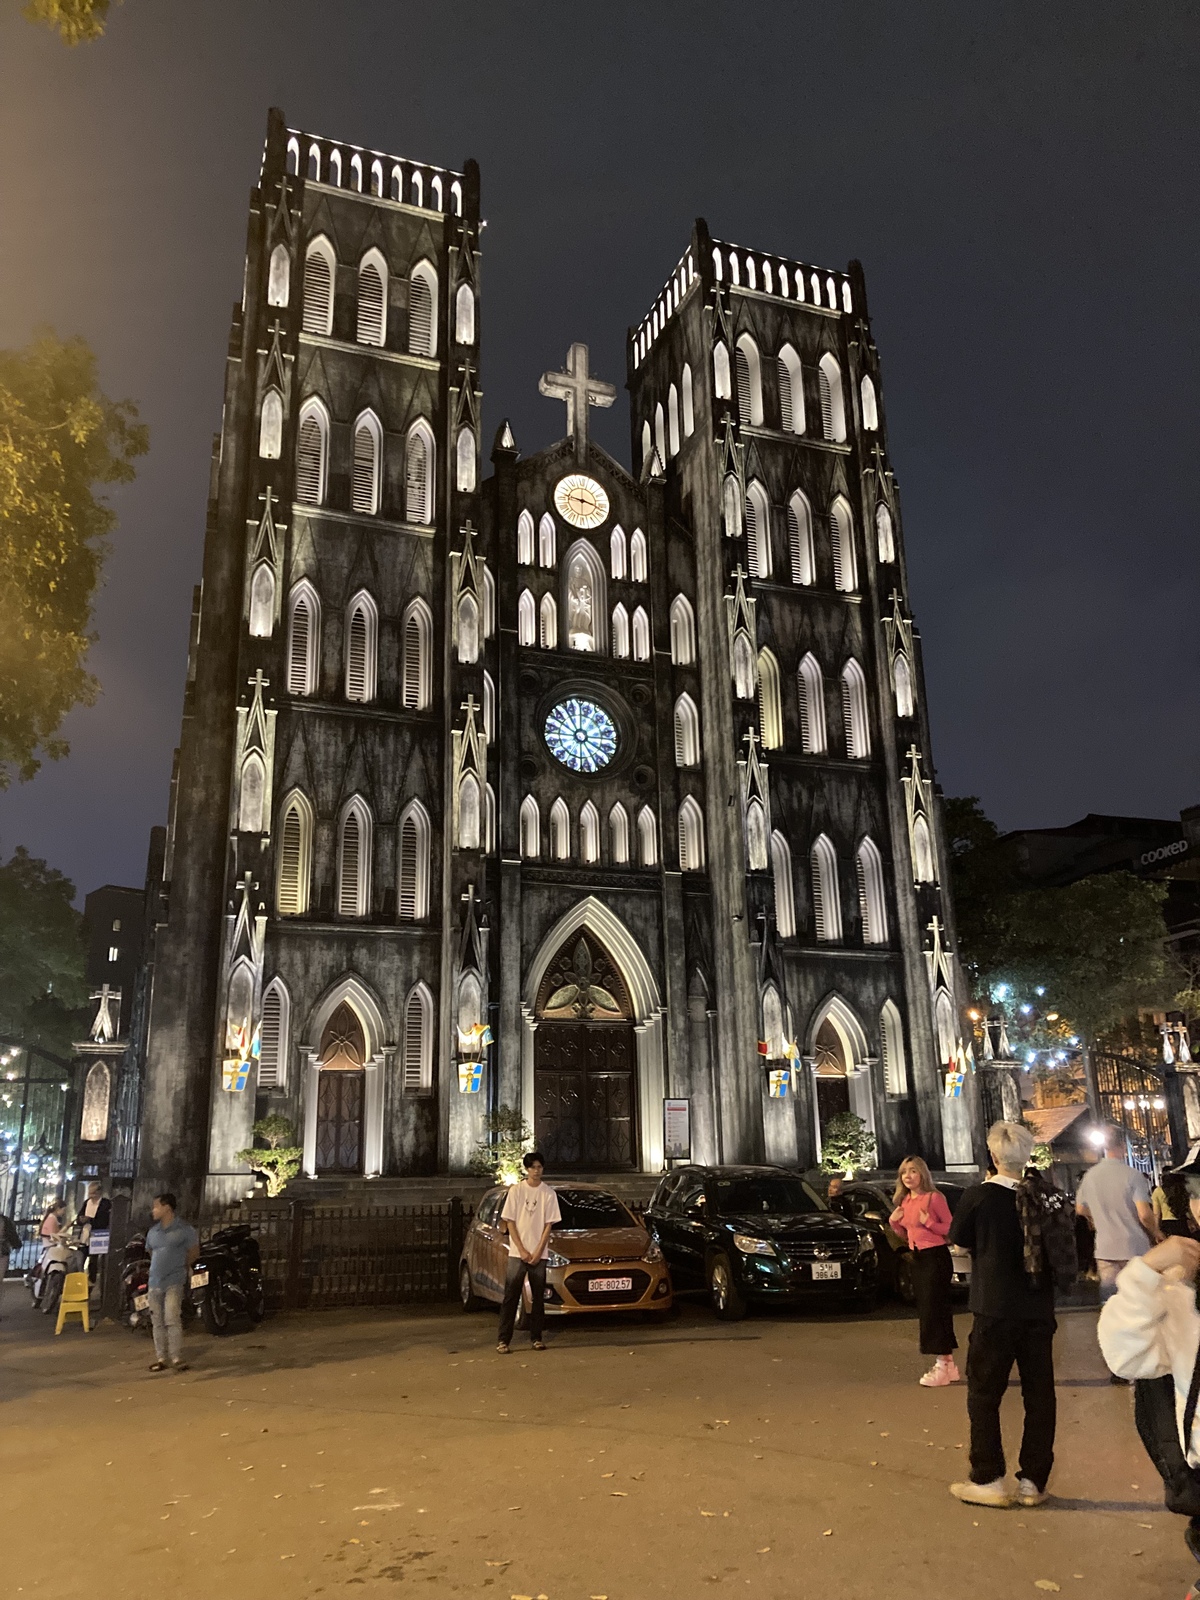 Katedra w HA noi, Wietnam